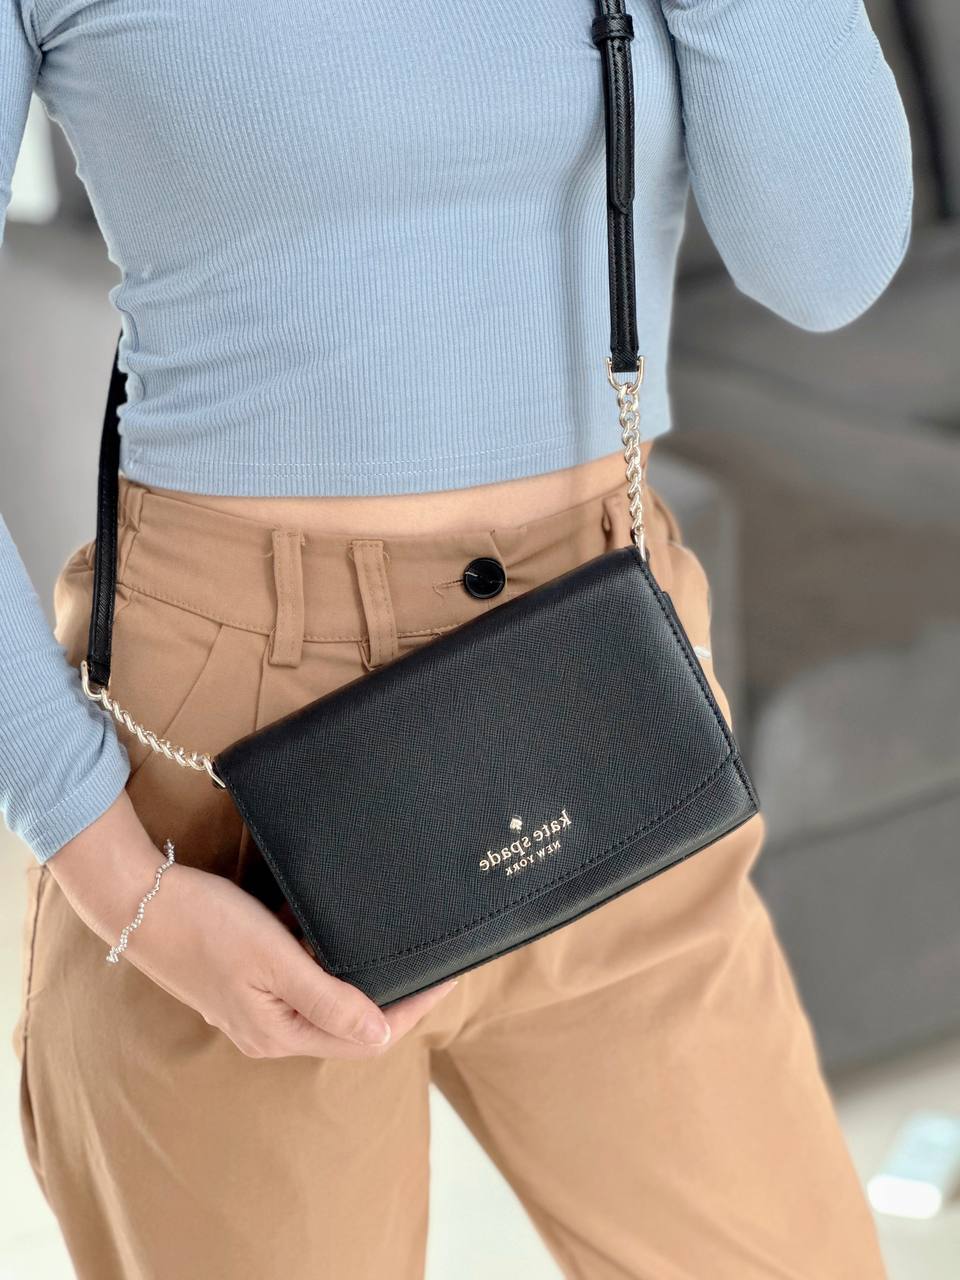 Kate Spade Staci Flap Top Handle Crossbody Bag In Black – Pickposh